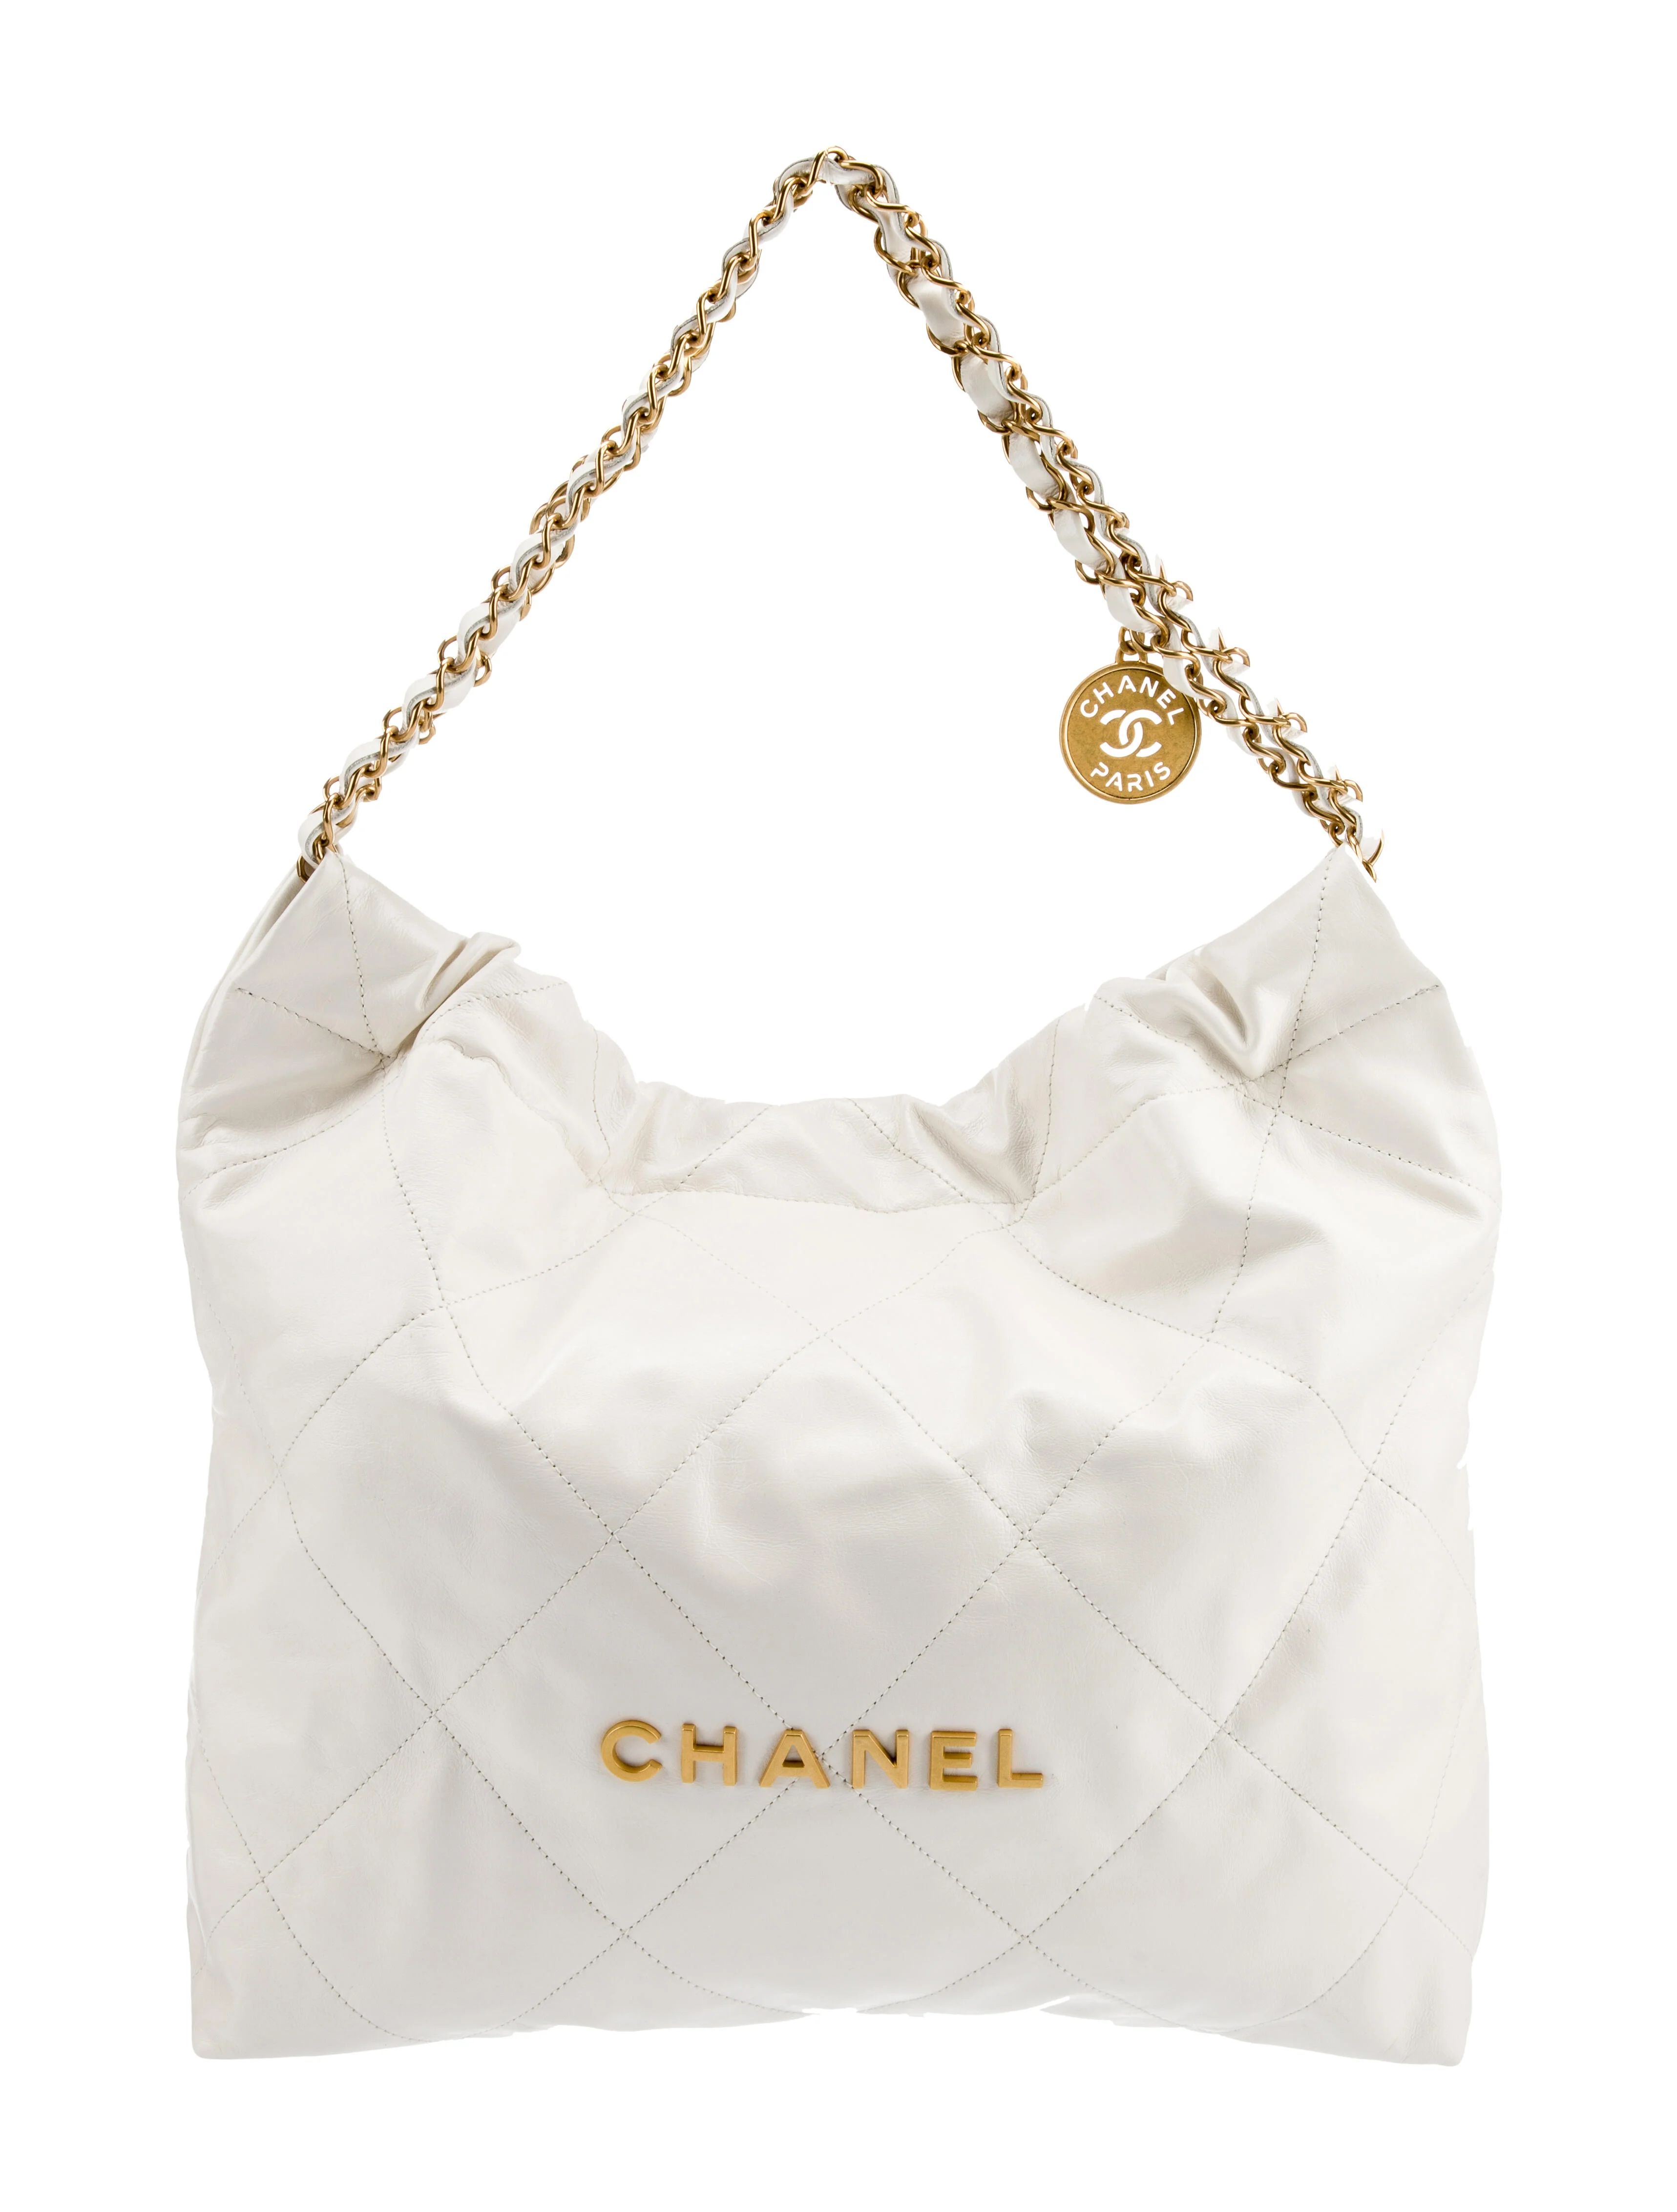 Chanel Hobo | The RealReal